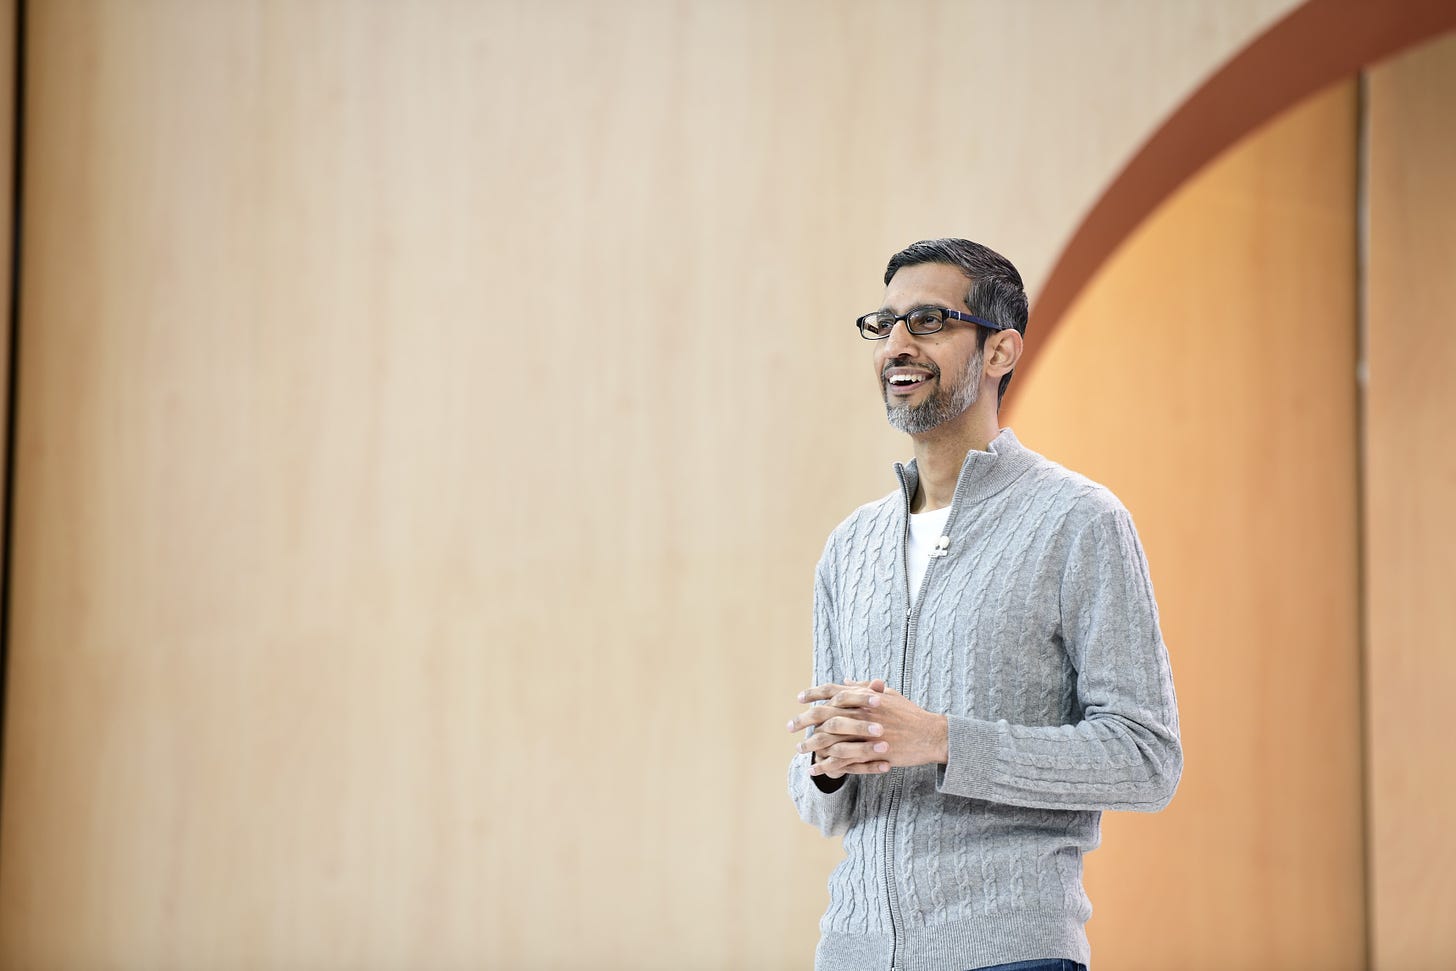 Google CEO Sundar Pichai speaks at I/O on Wednesday in Mountain View. (Google)